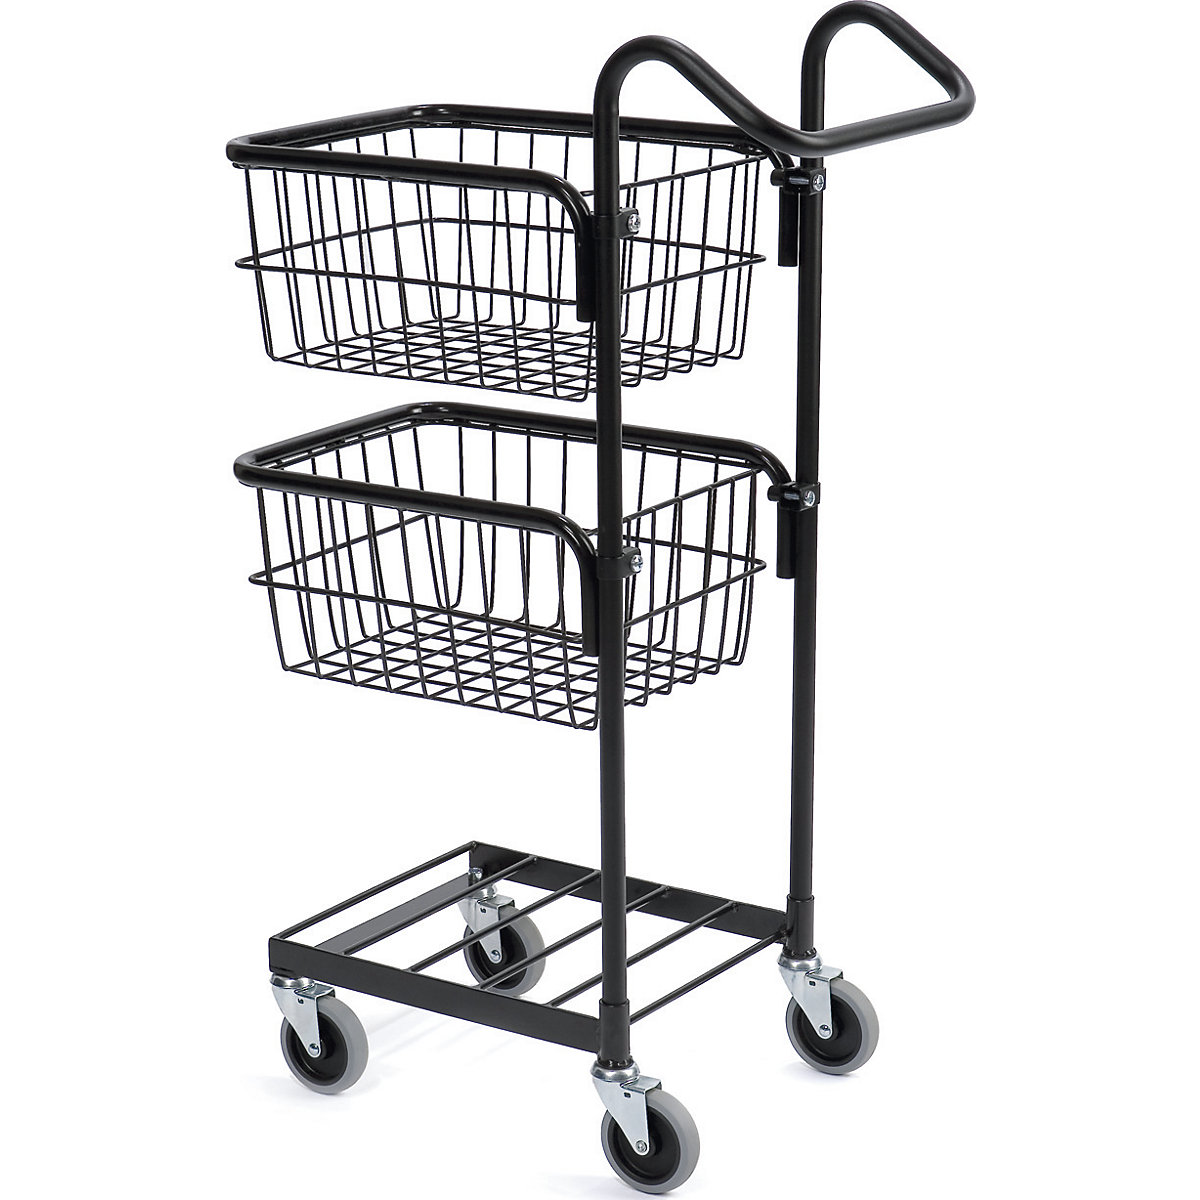 KOMPAKT retail bin – HelgeNyberg, 2 baskets, black frame, 5+ items-5